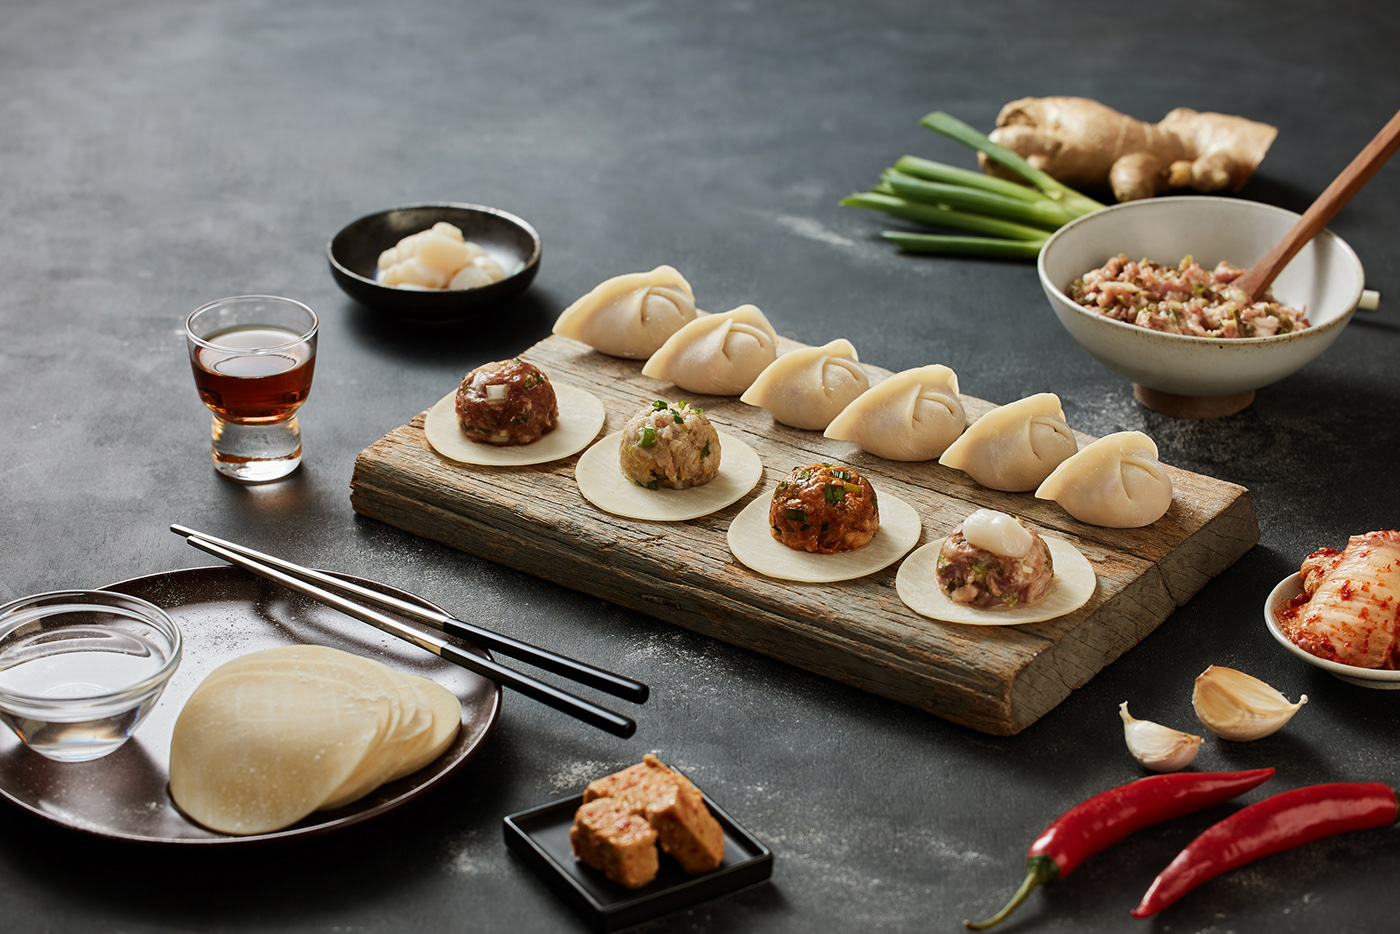 dumplings chinese food photography food styling restaurant menu asia